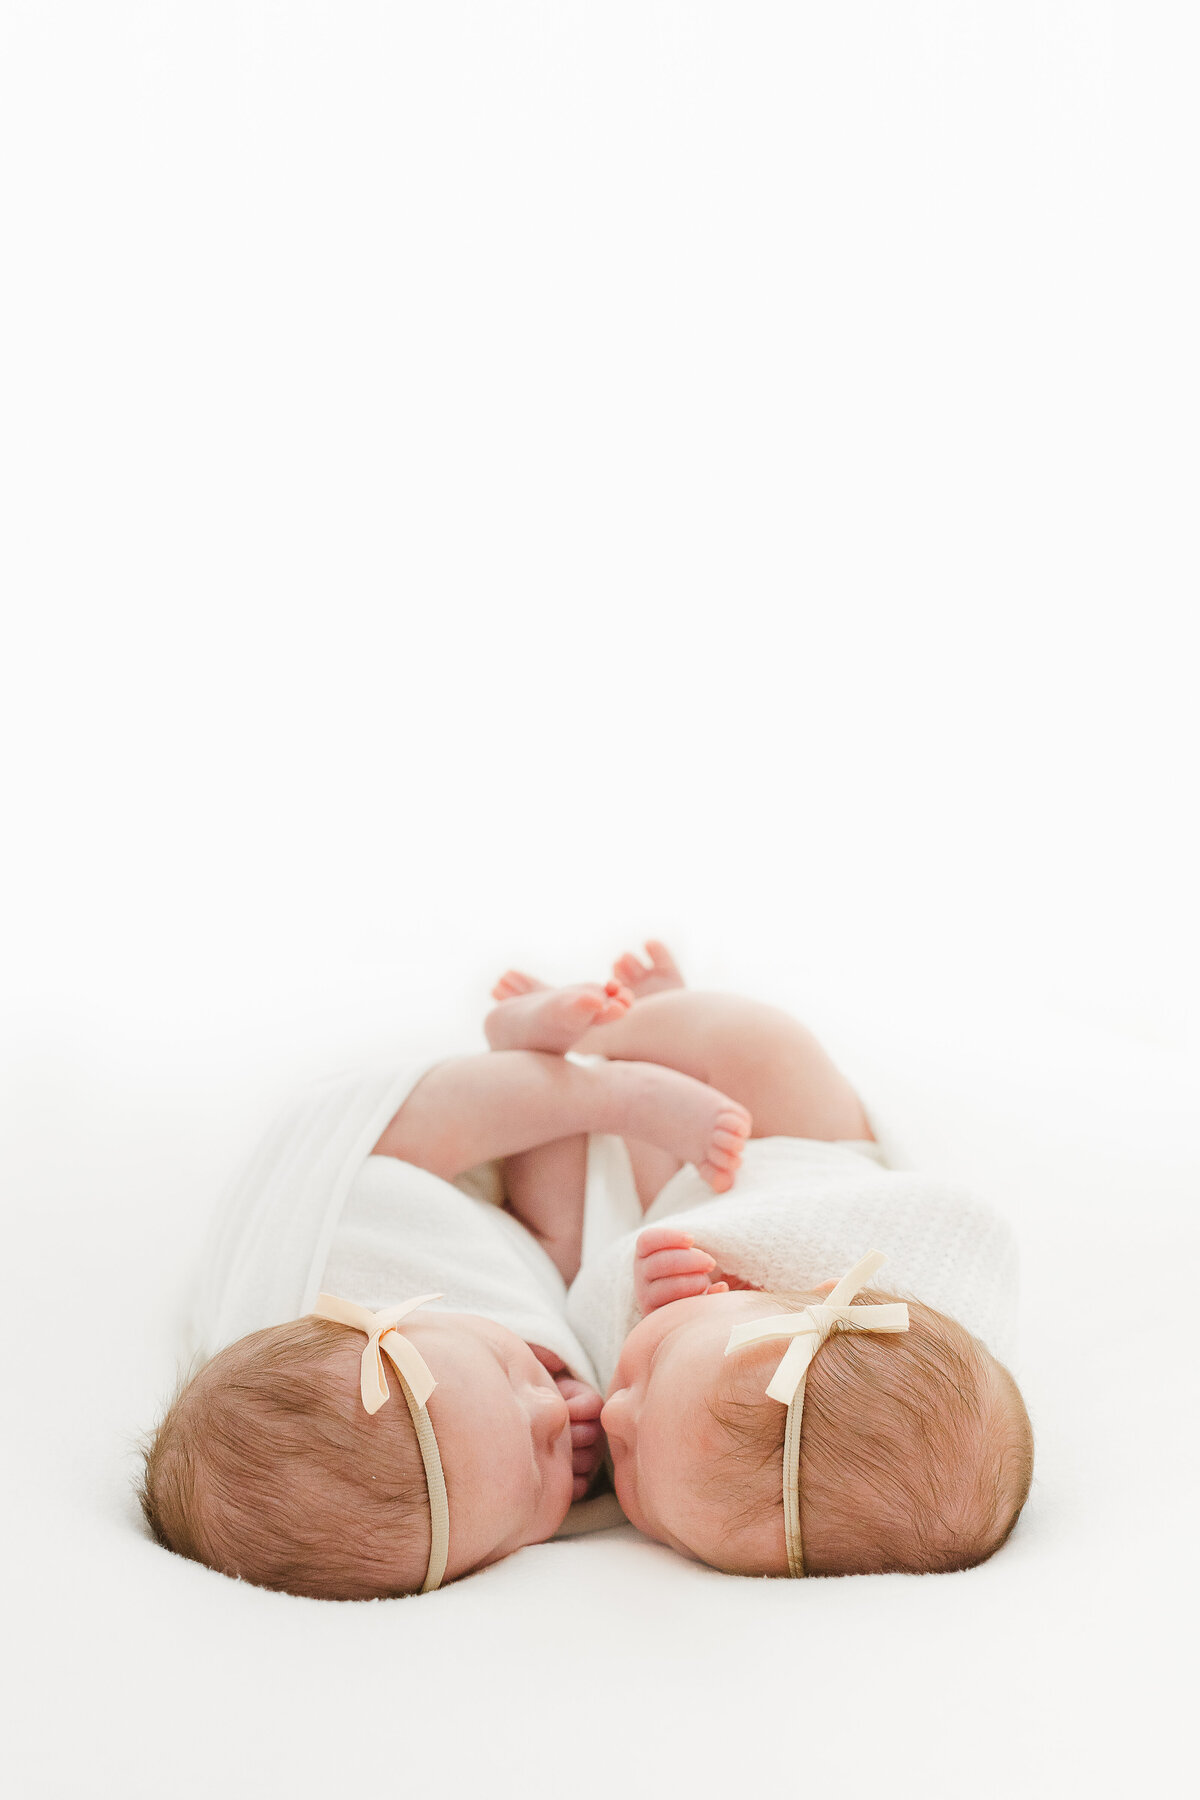 Katlyn-Regnier-Newborn-Photos-170